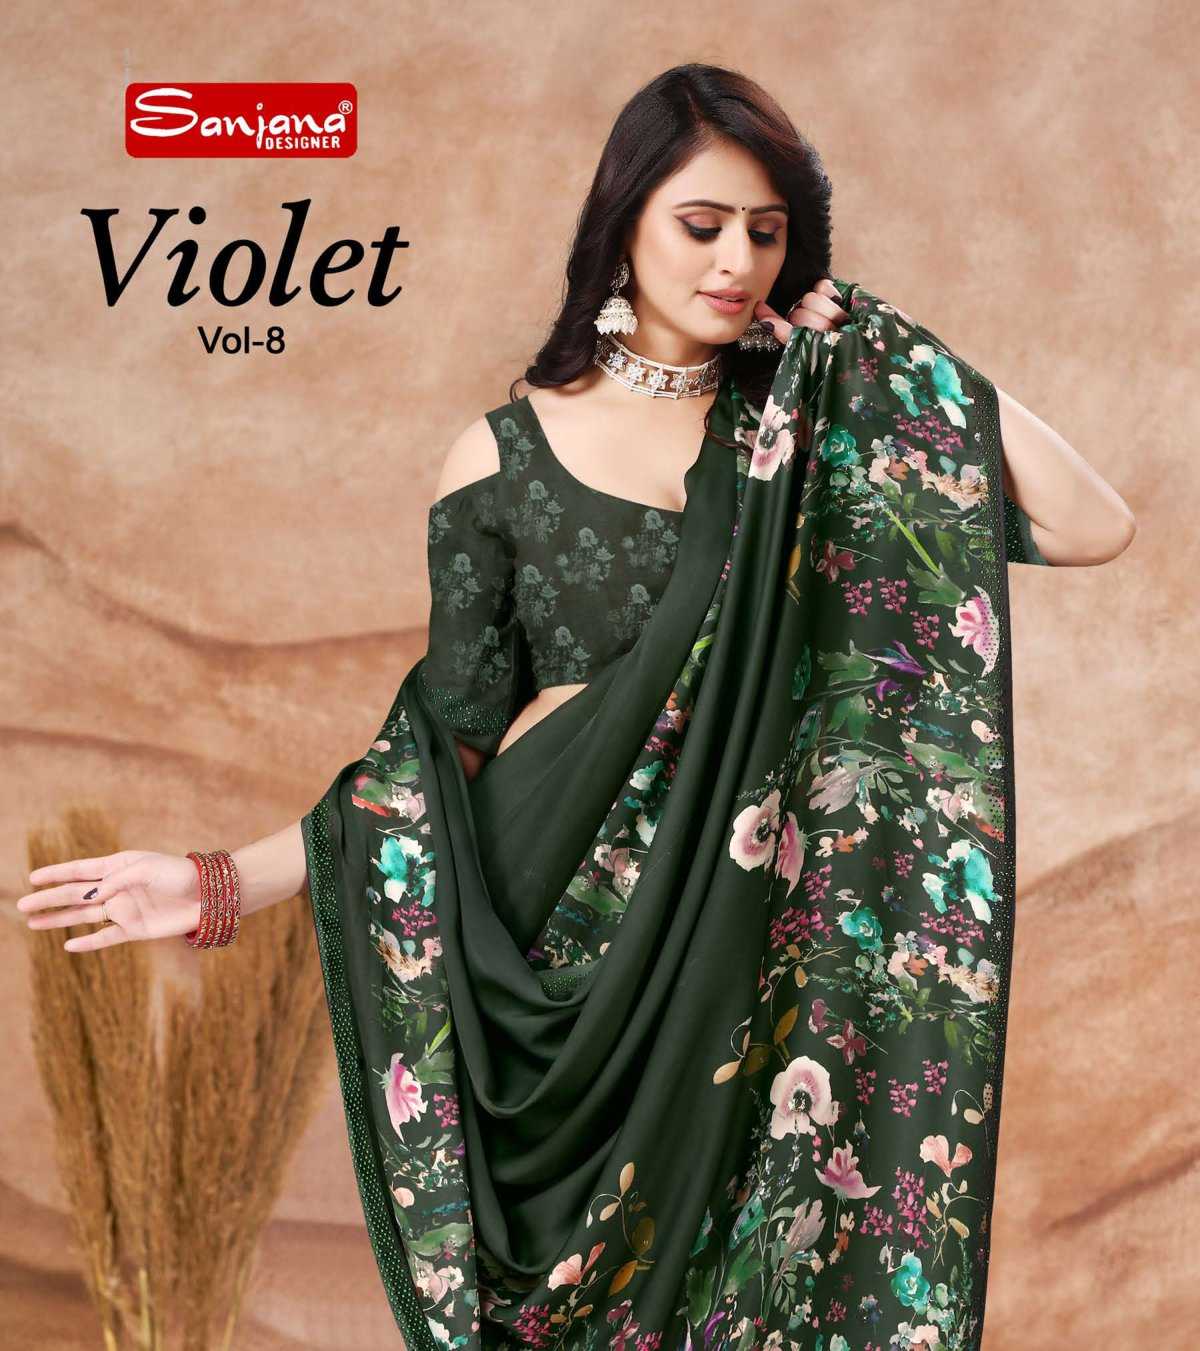 violet vol 8 by sanjana designer beautiful satin georgette sarees